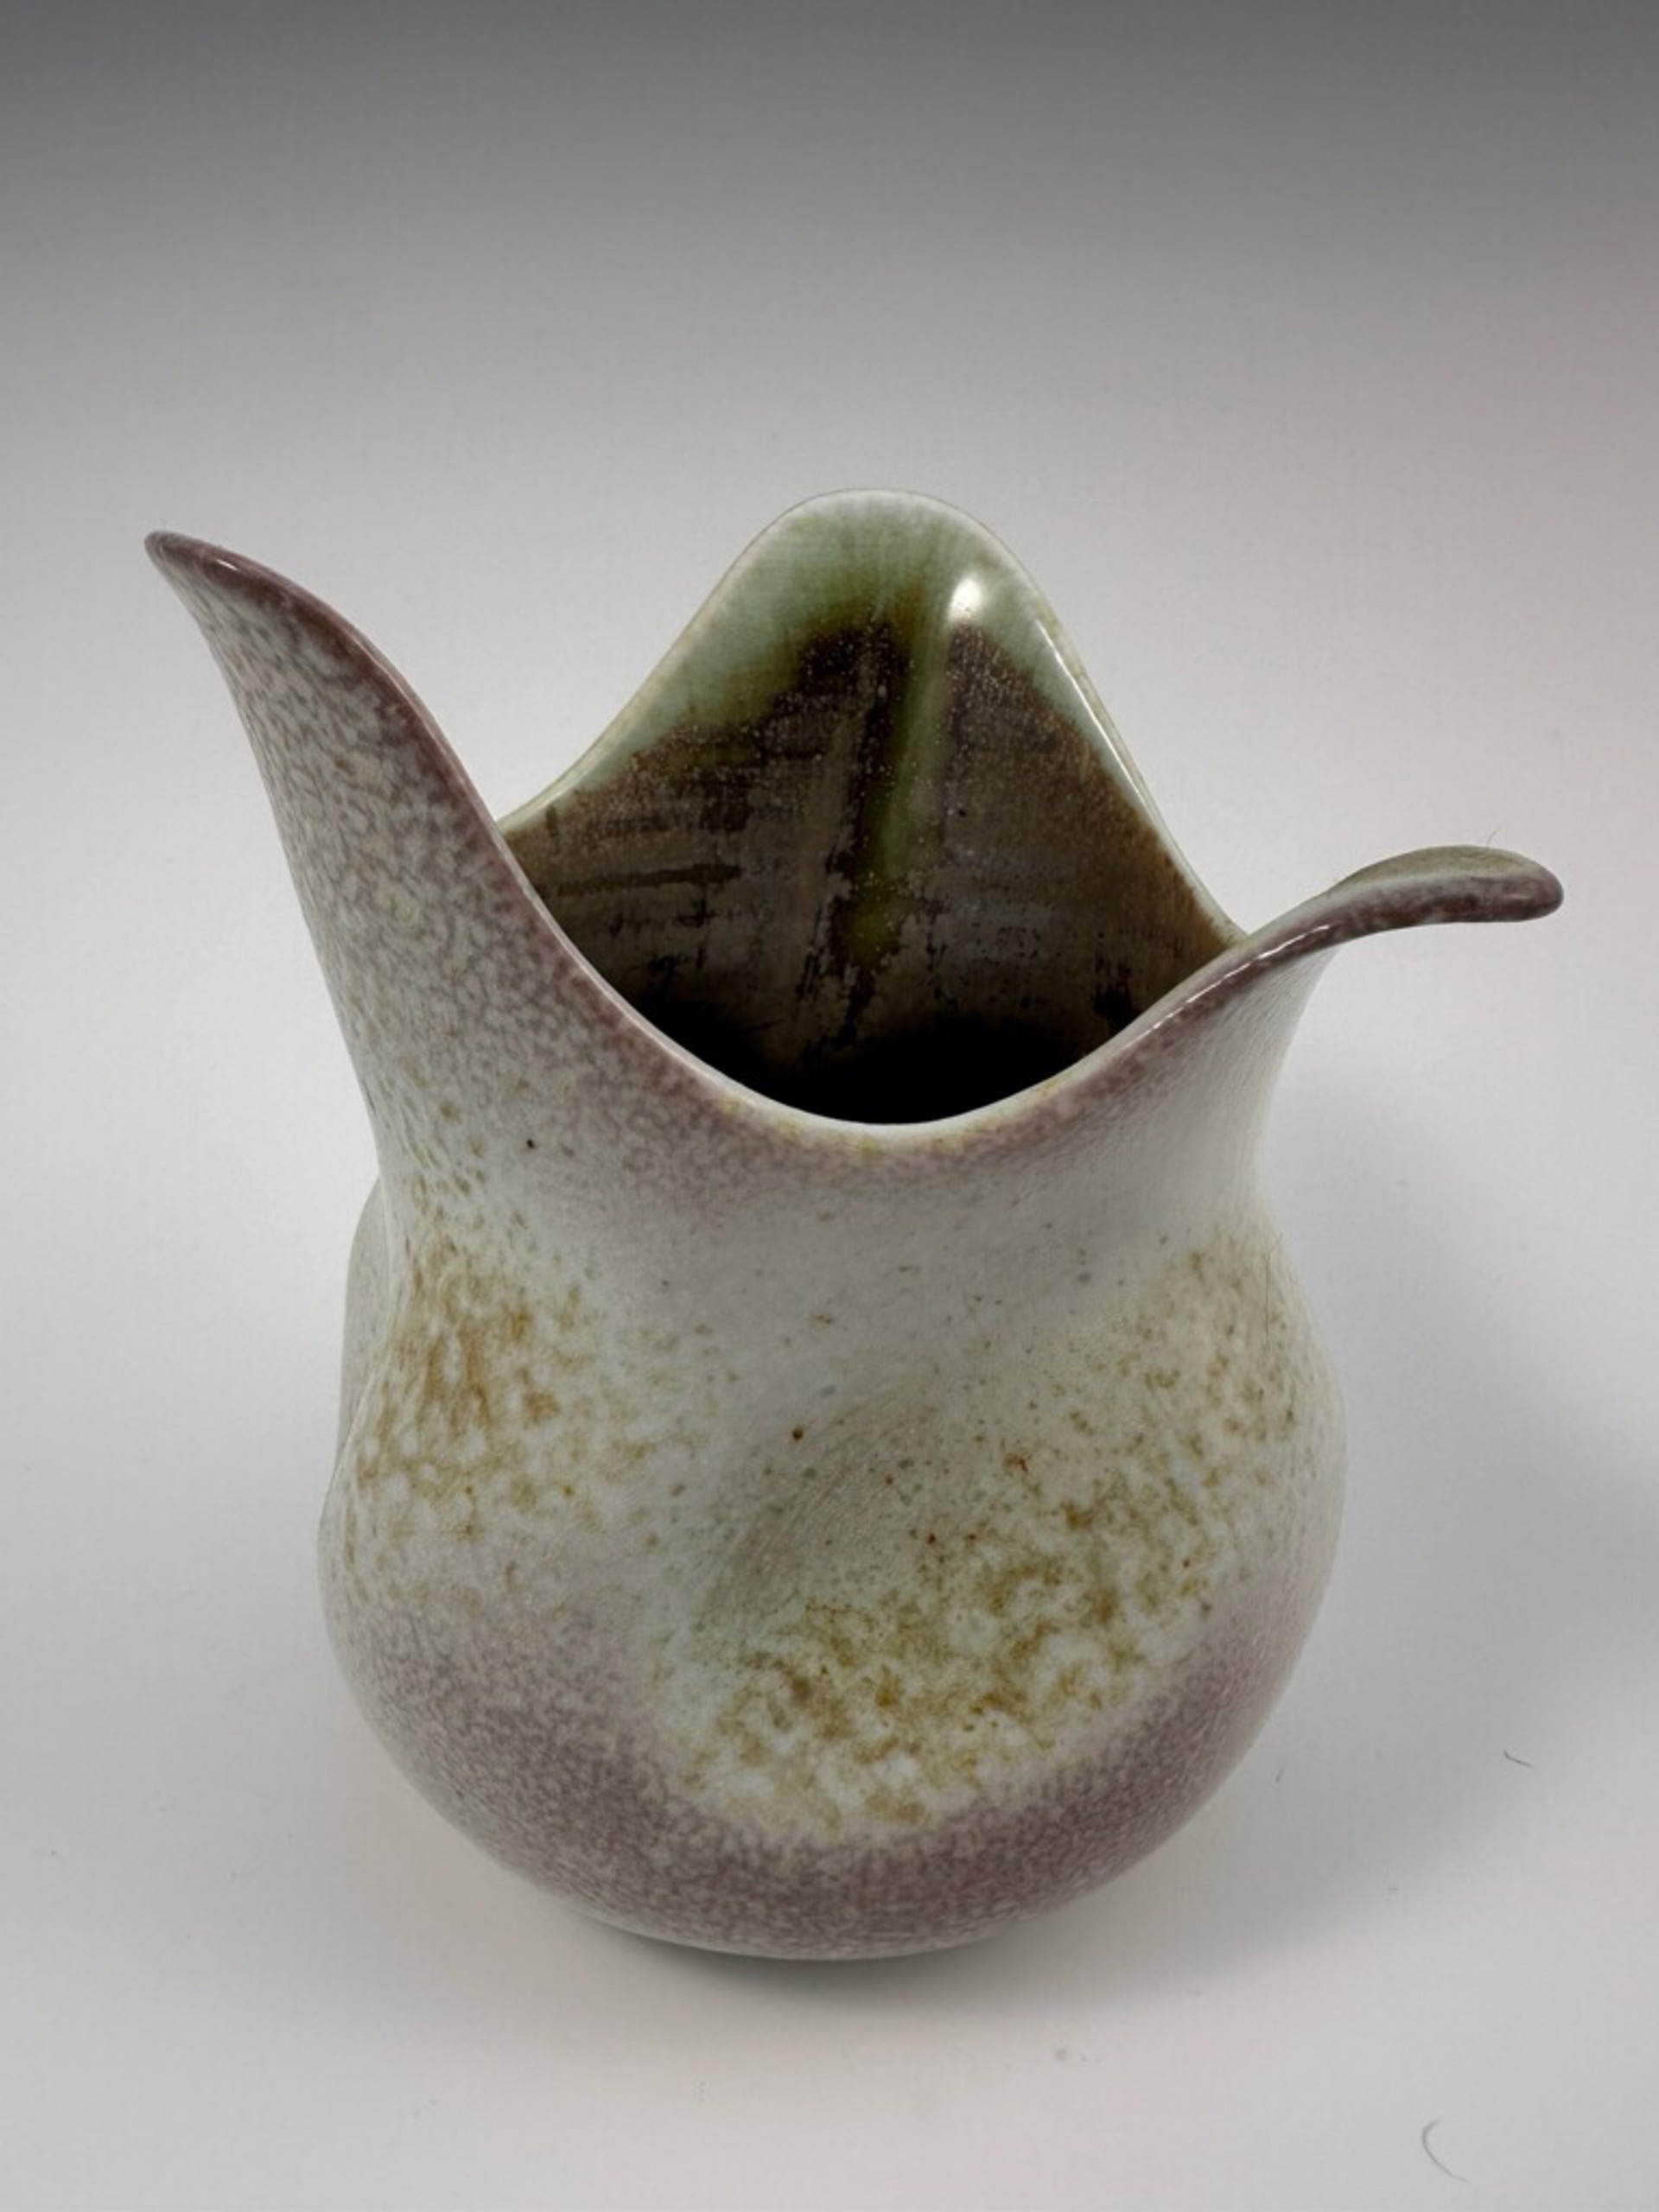 Vase 22 by David LaLomia